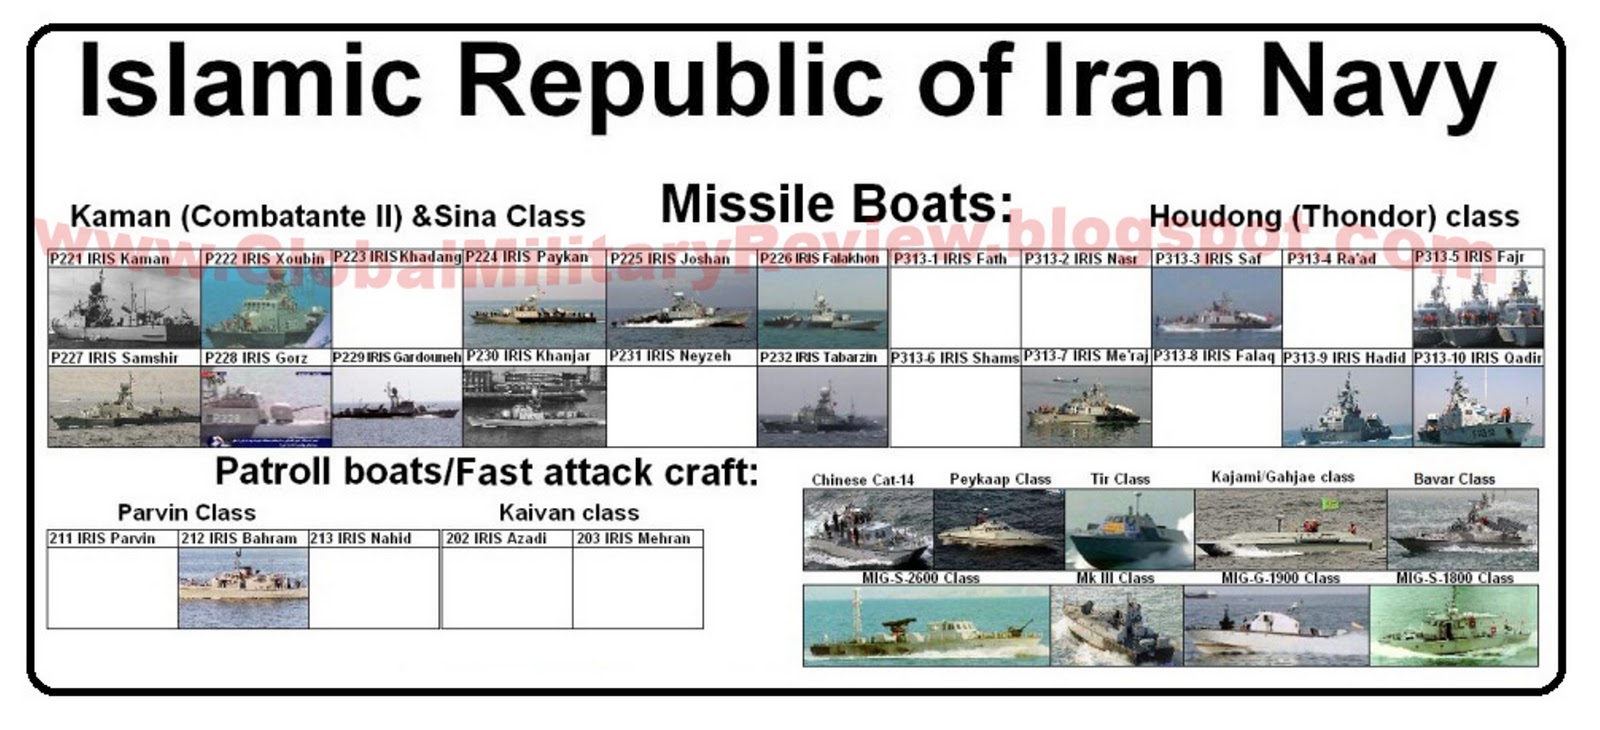 Iranian+Navy+Submarines+Kilo+SSI+Fateh+Nahang+Ghadir+Yugo+Destroyers+FrigatesAlvand+MoudgeCorvettes+Bayandor+Hamzeh+MissileCraft+Houdong+KamanSina+Patrol+Coastal+ParvinKaivan+Bavar+Patrol+Inshore+Zafar+Chinese+Cat+PBF+PTF+Hovercraft.jpg